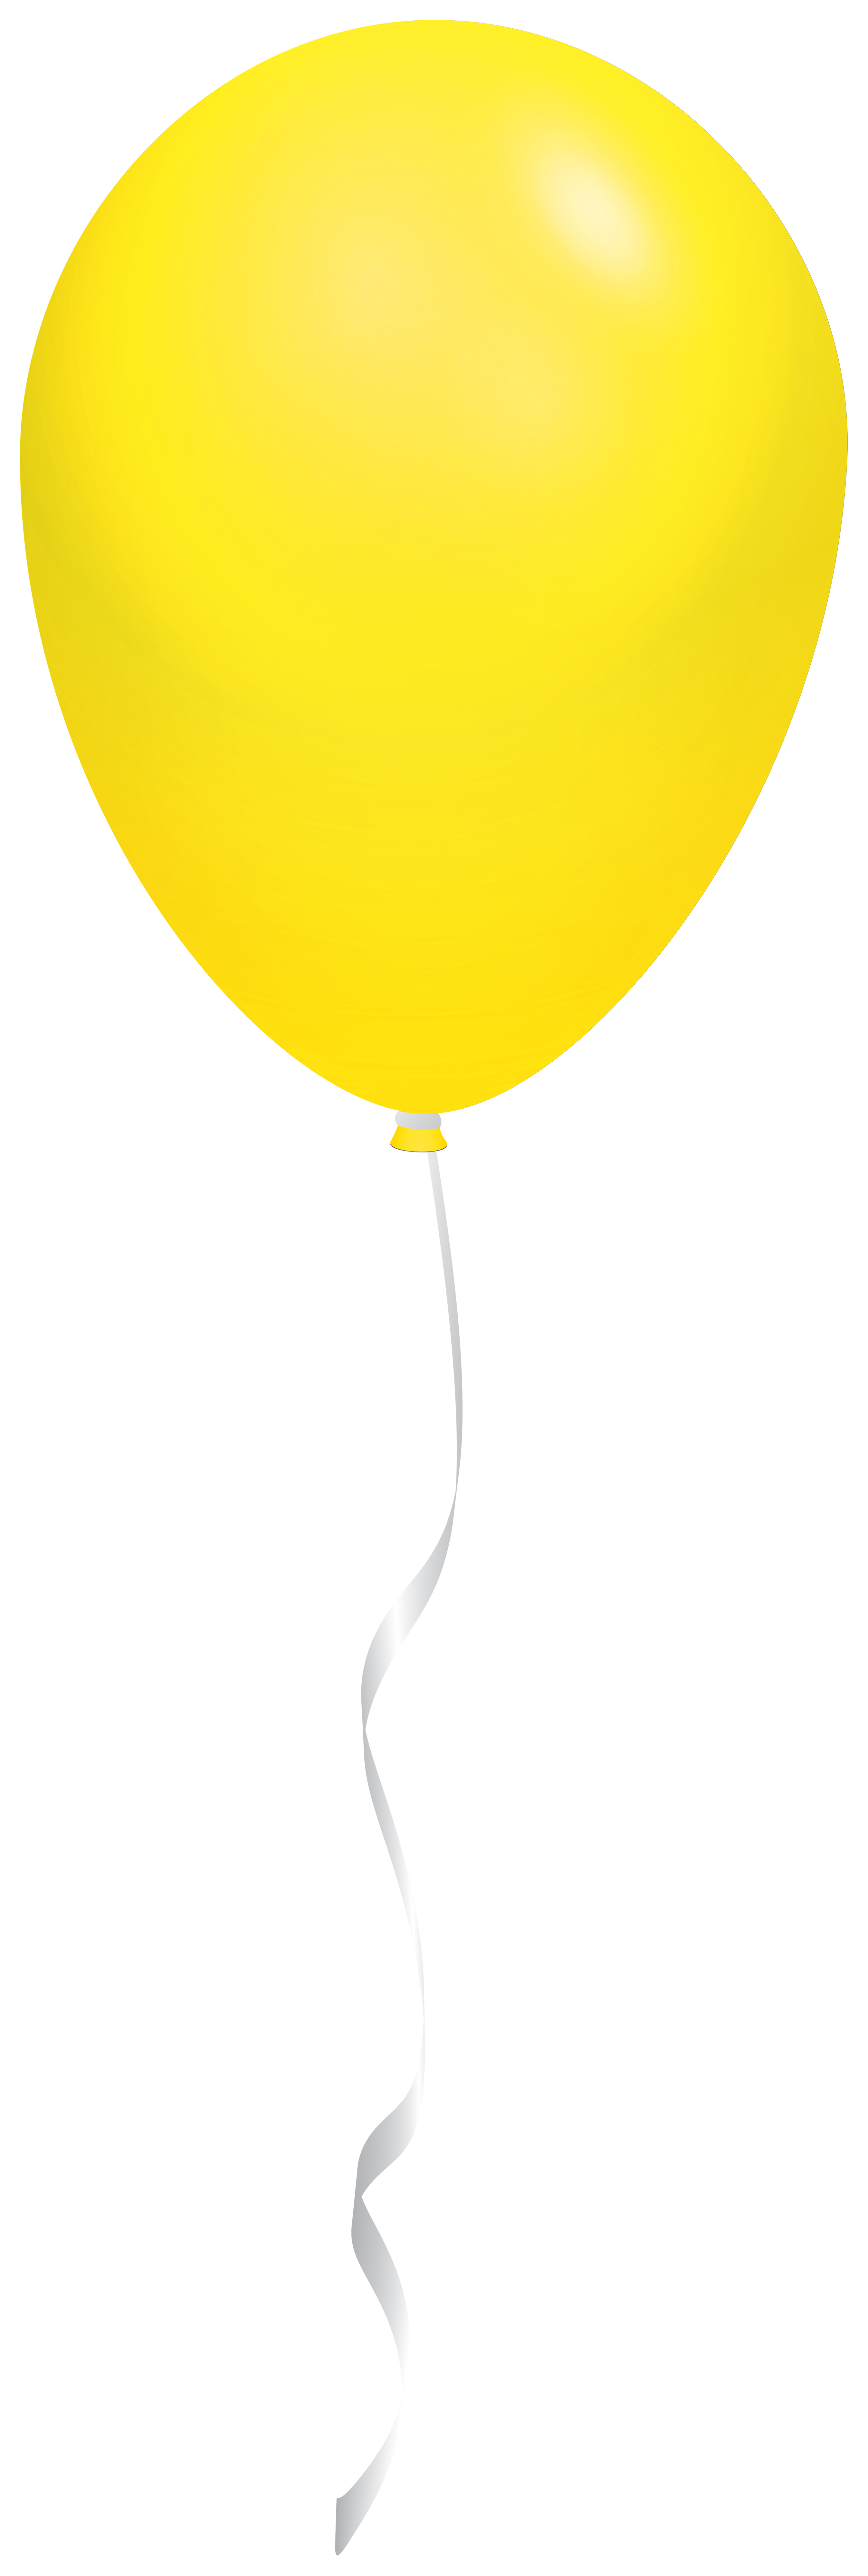 one yellow balloon